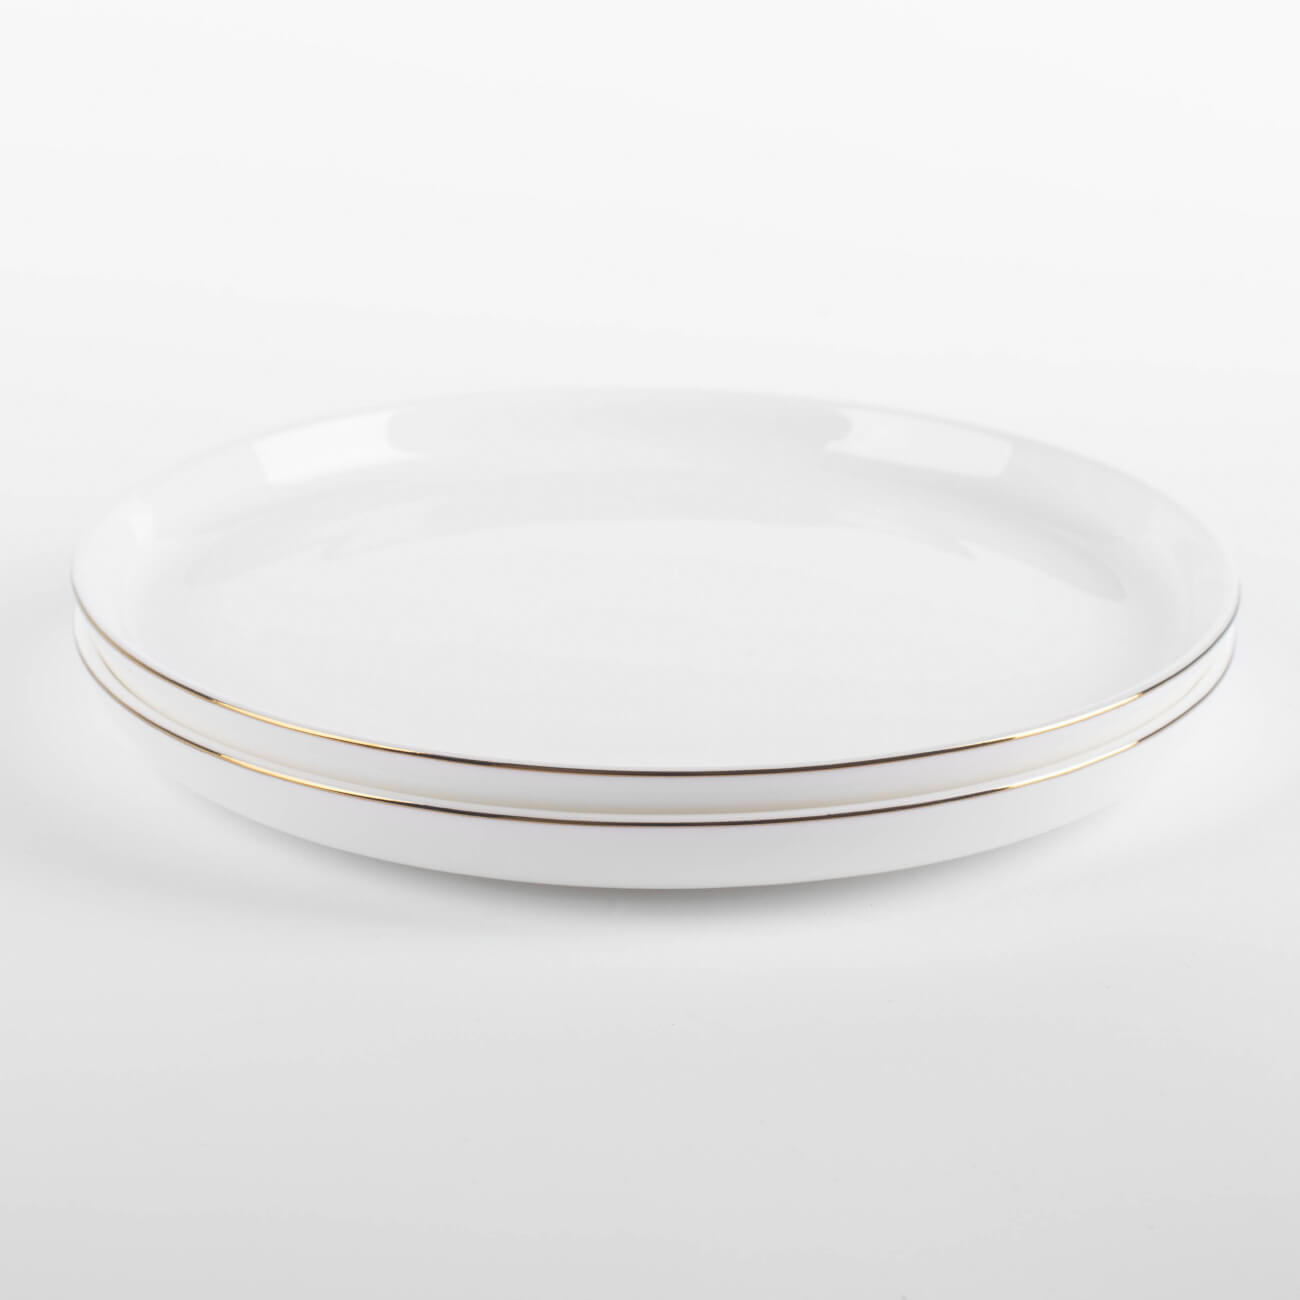 Тарелка десертная, 20 см, 2 шт, фарфор F, белая, Ideal gold тарелка десертная golden opal white купол 19 5 см